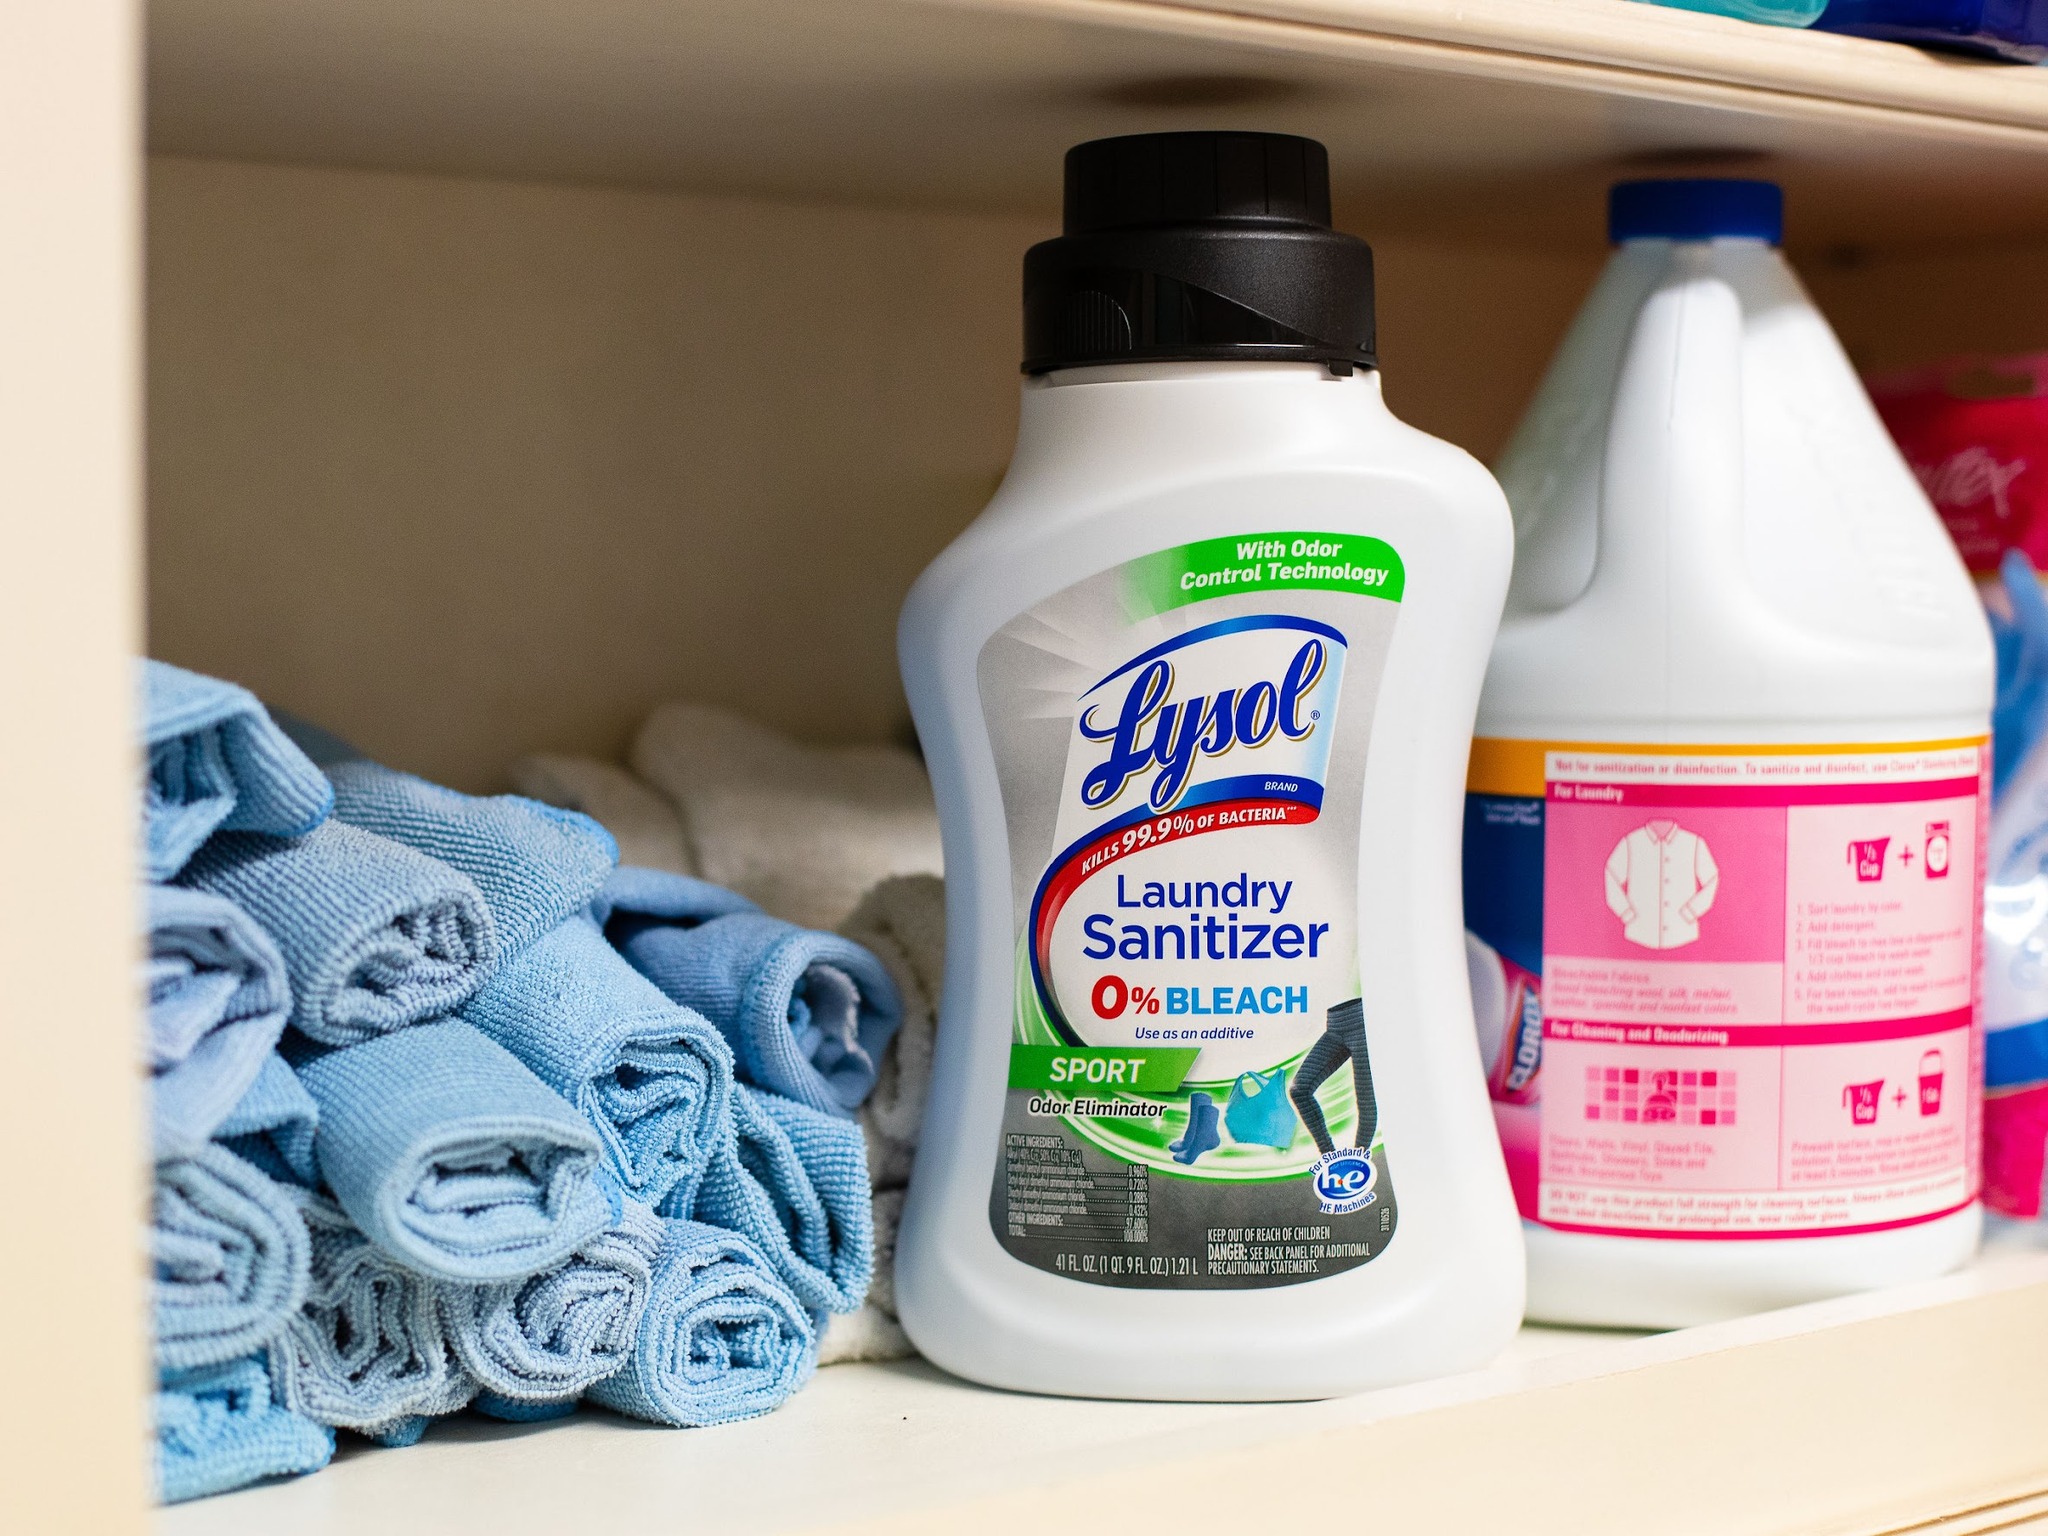 Lysol Laundry Sanitizer Just $3.99 At Publix (Regular Price $7.99)